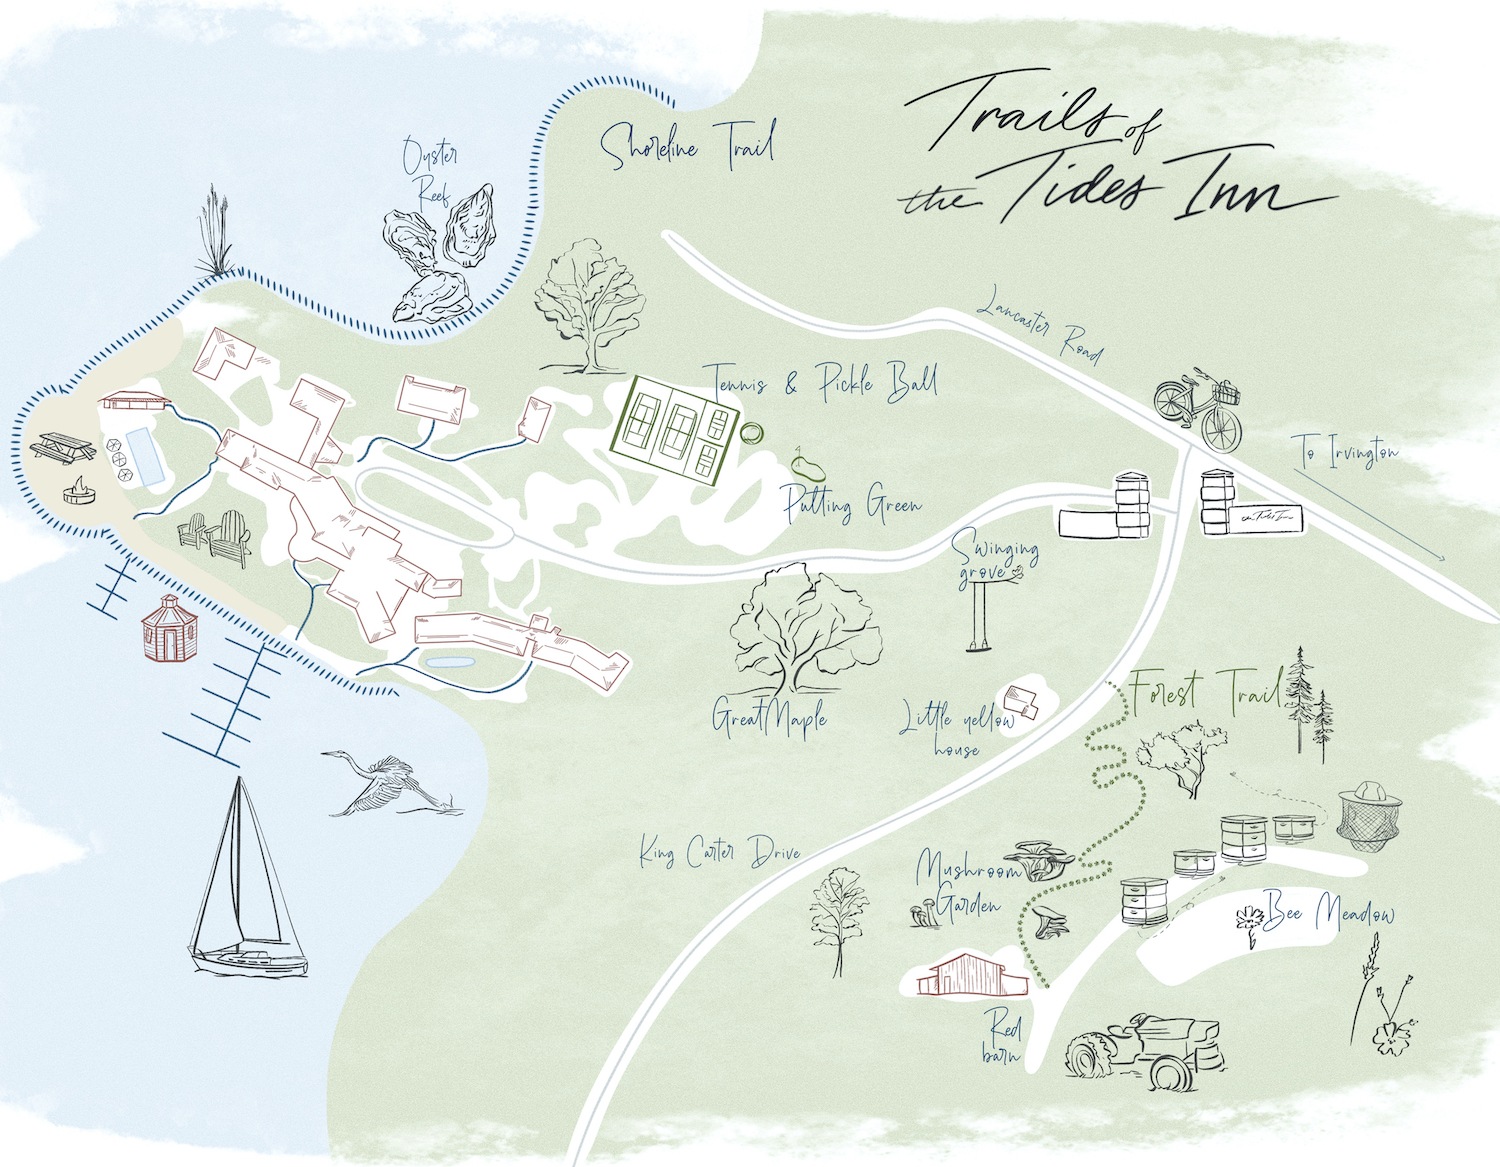 Trails of Tides inn sketch